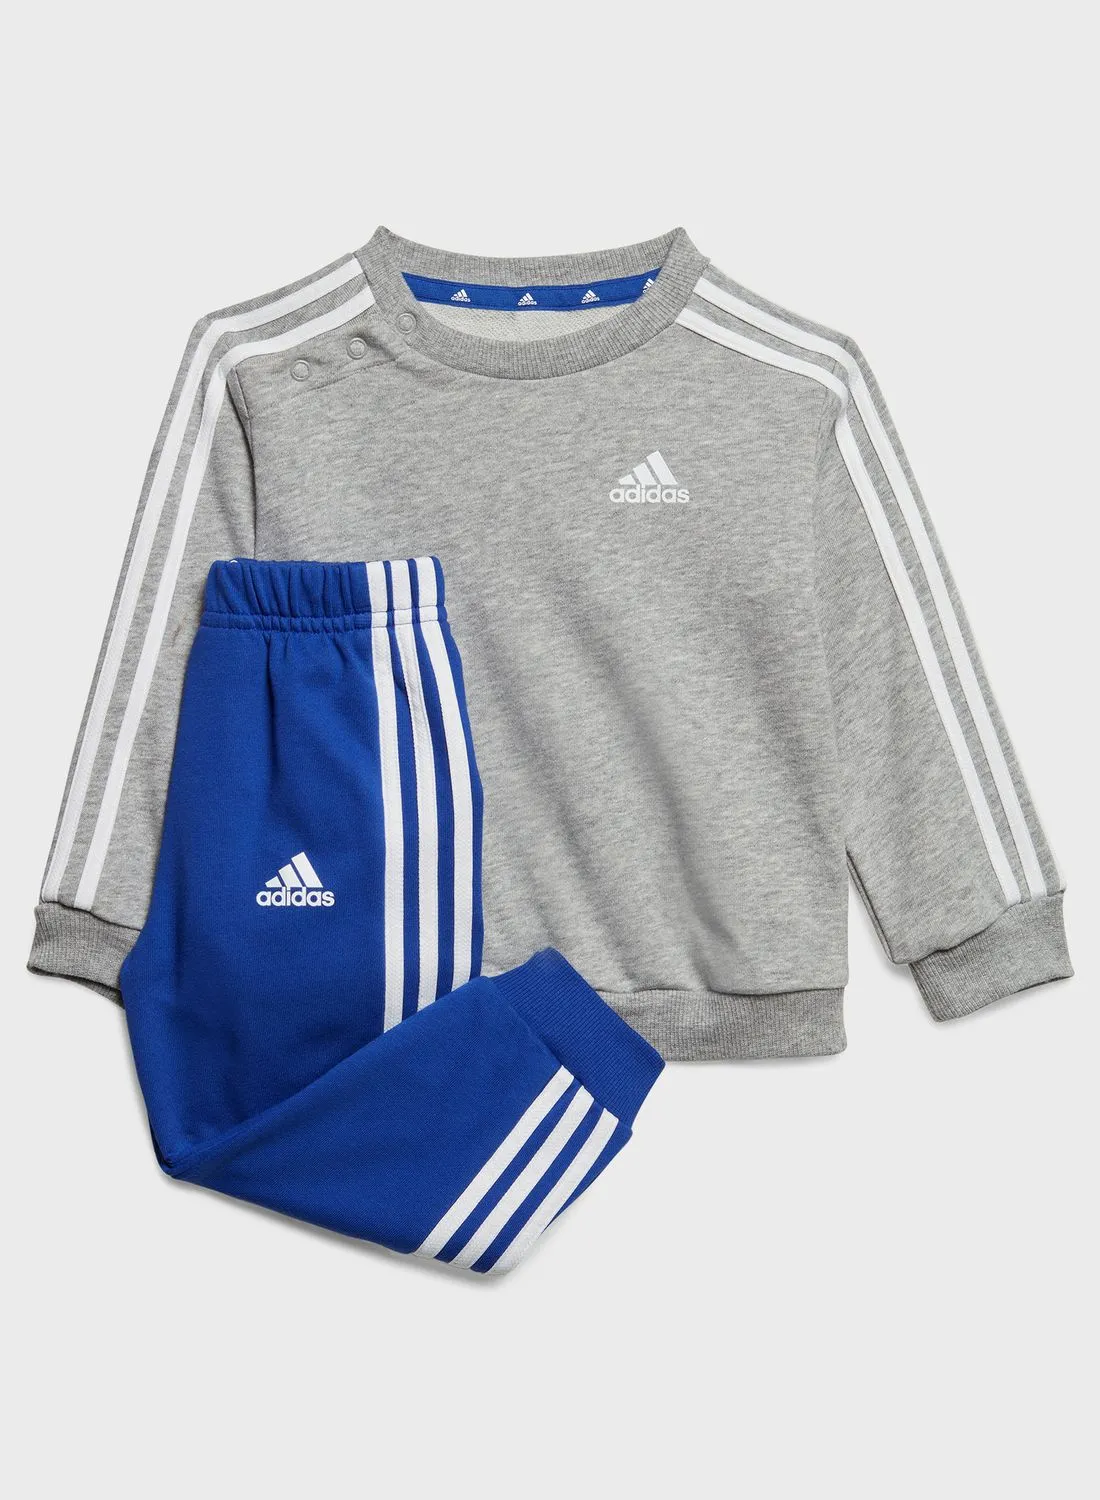 Adidas Infant 3 Stripes Set